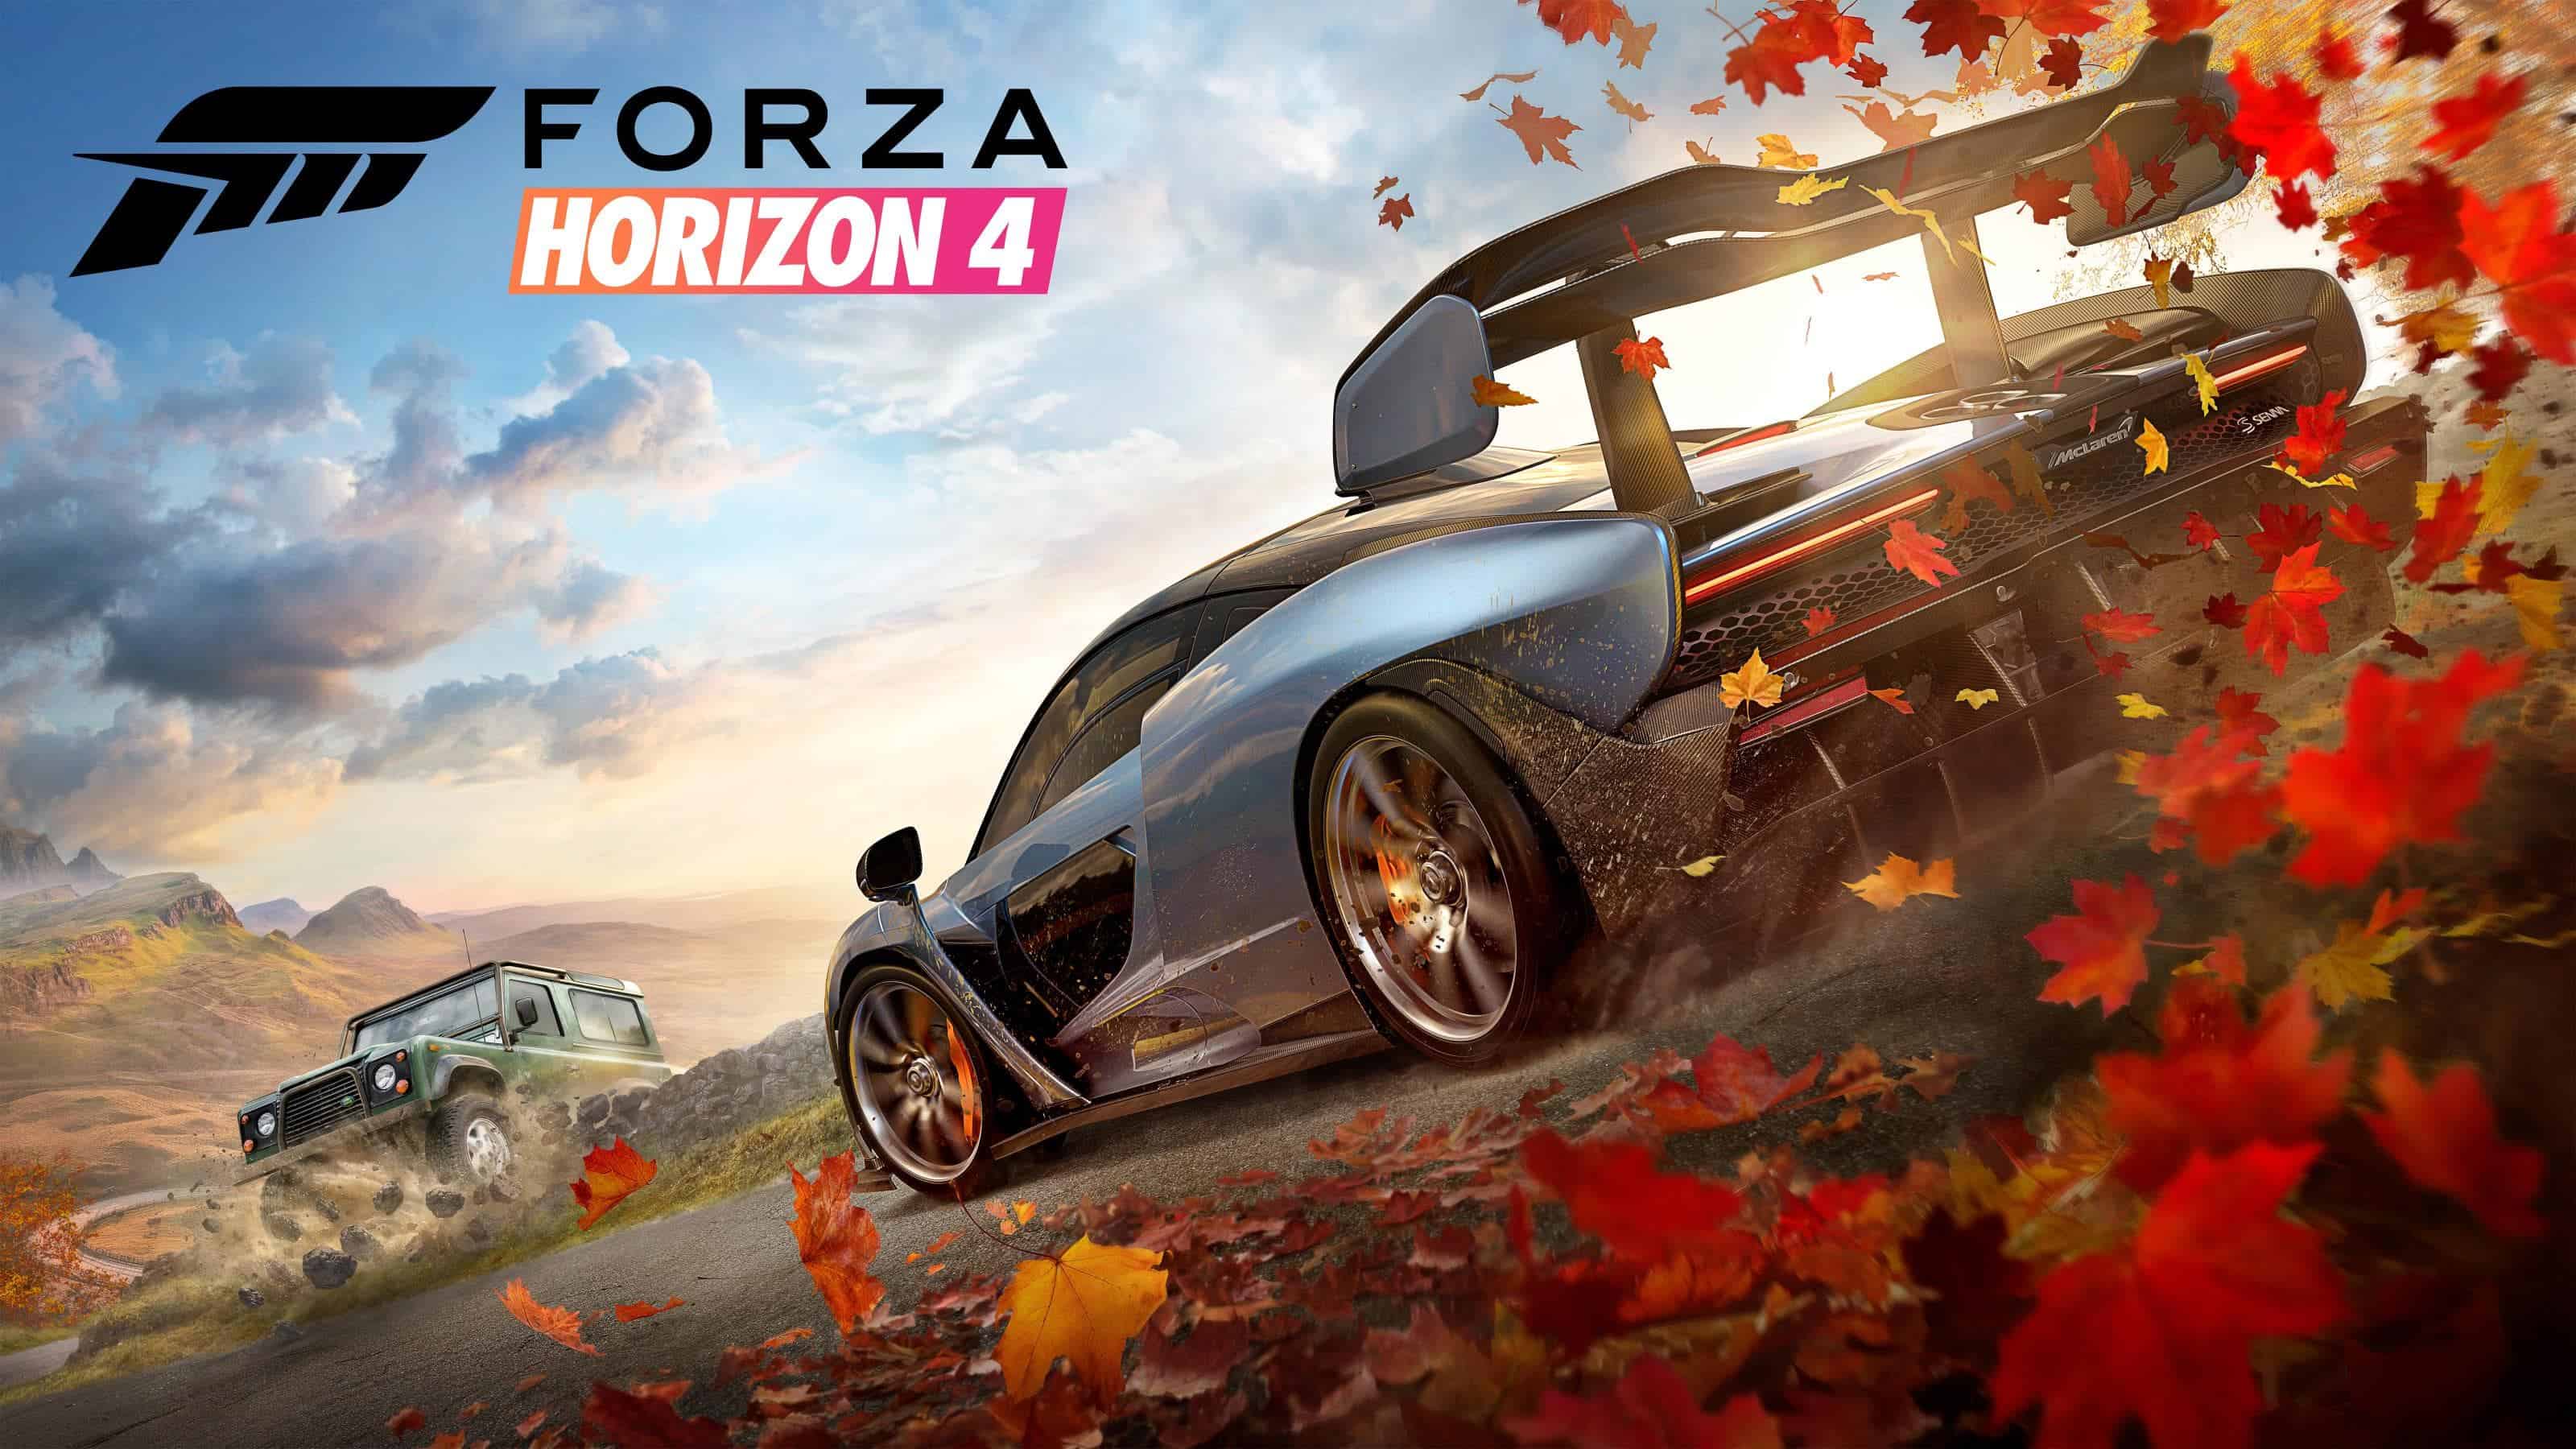 Insist Strength Sway PC Forza Horizon 4 SaveGame 746 lvl - Save File Download